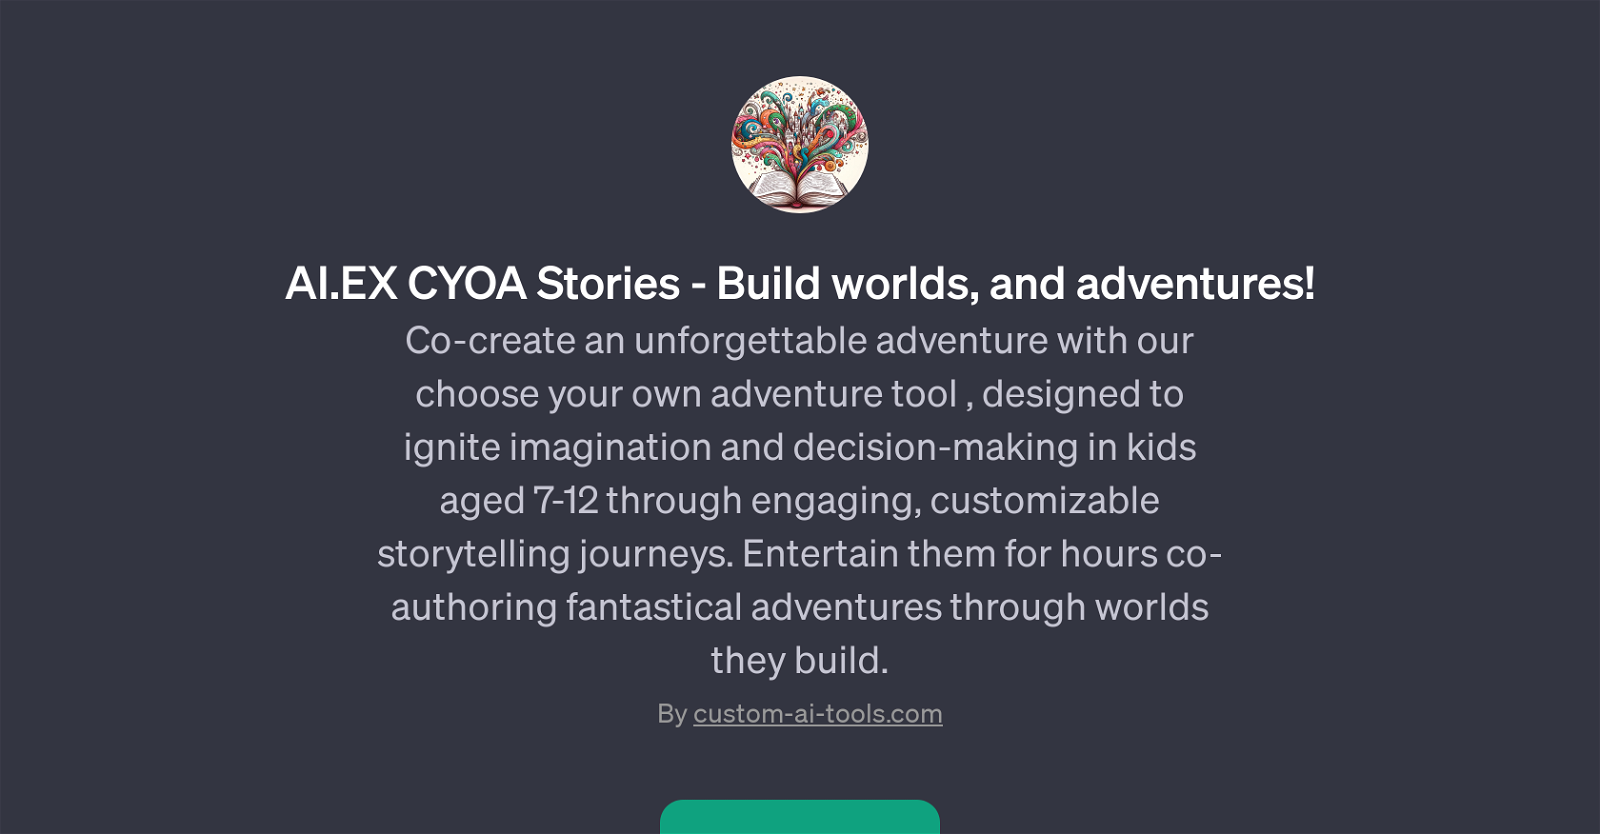 AI.EX CYOA Stories website